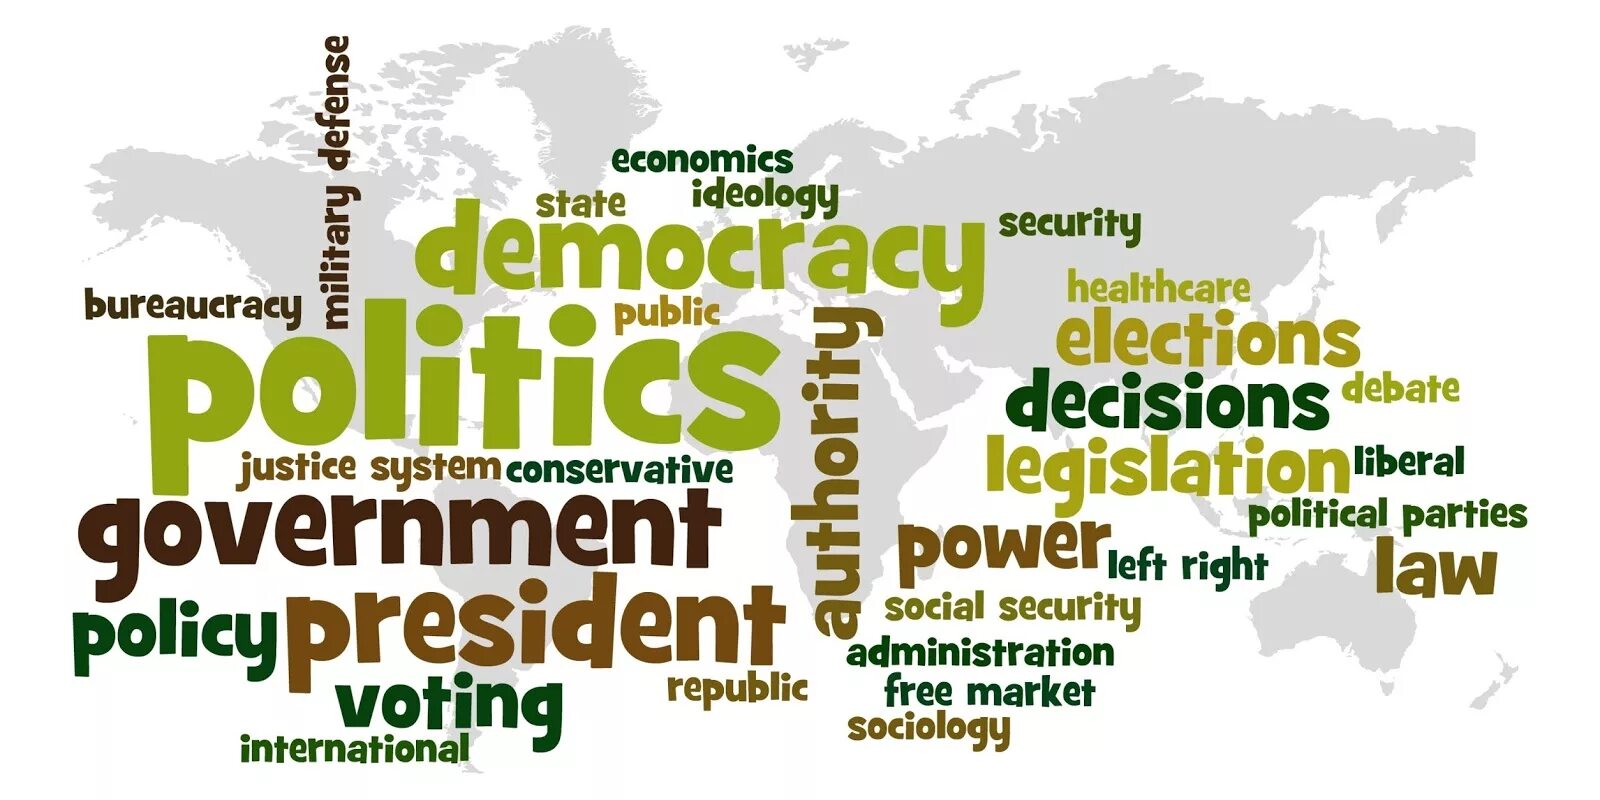 Political ideologies. Политикс. Political Security. Ideology in International Politics. State economy